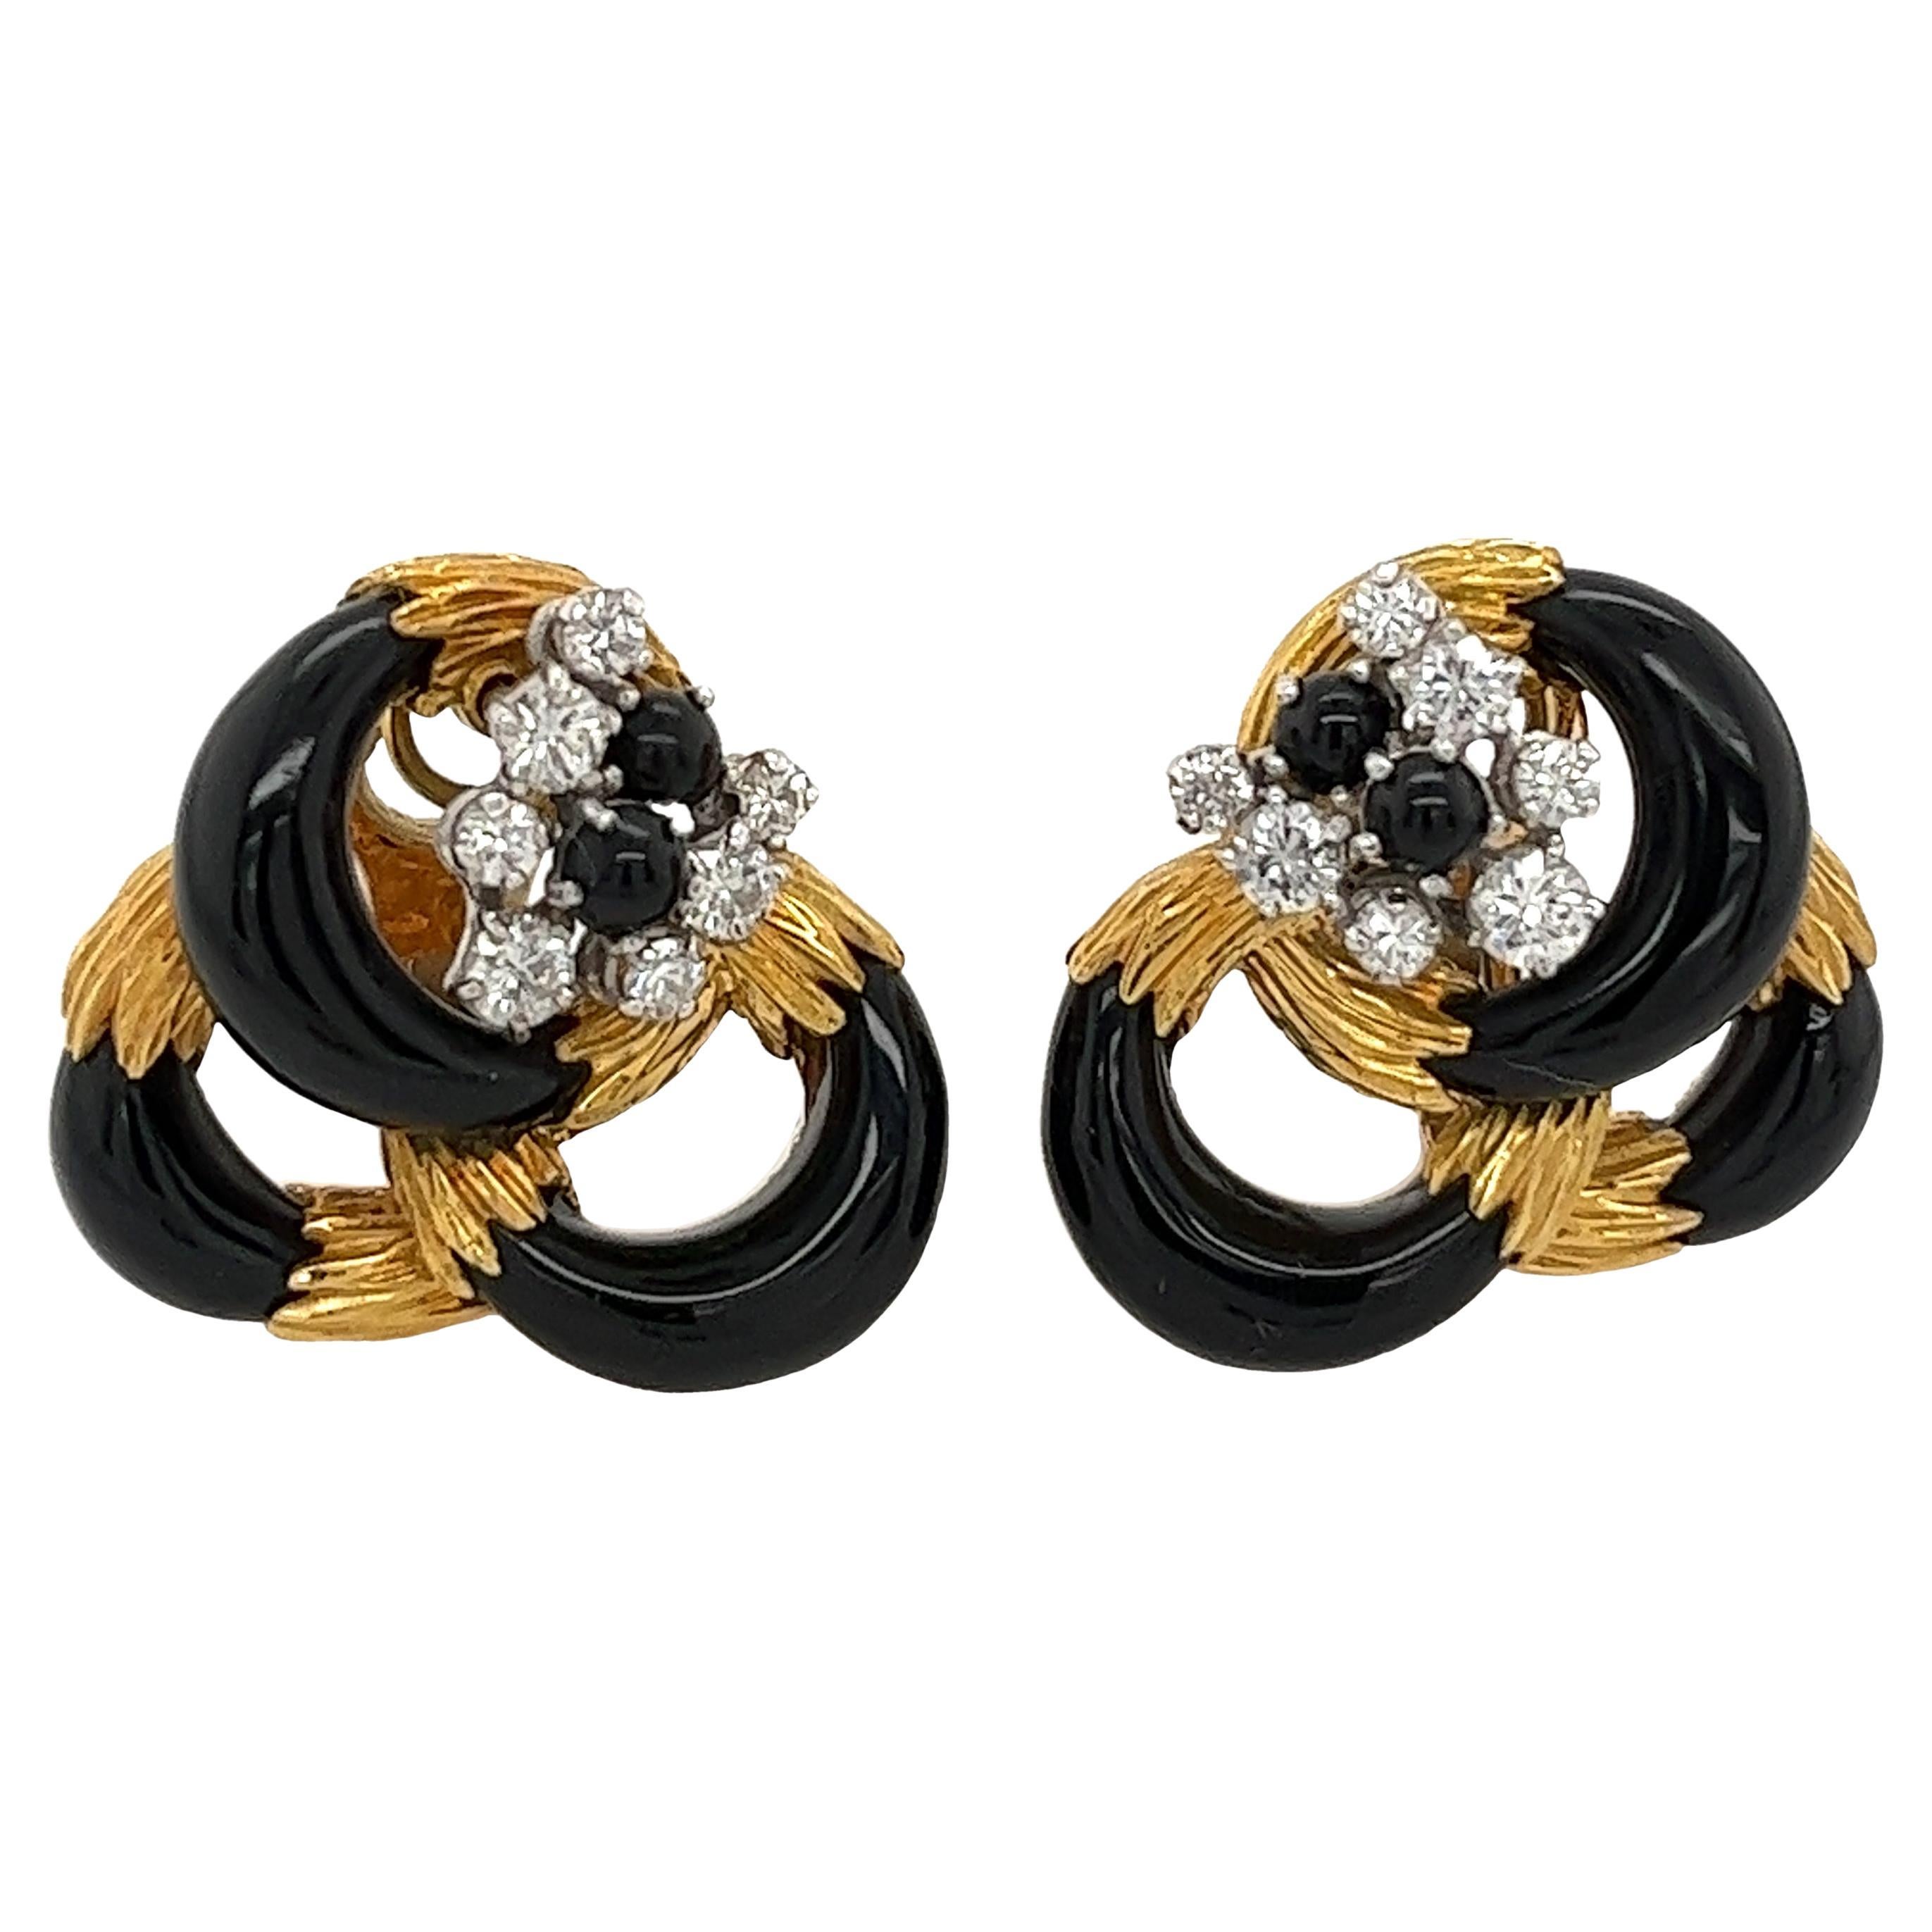 Kutchinsky Vintage Diamond Earrings Black Enamel Set In 18ct Yellow Gold